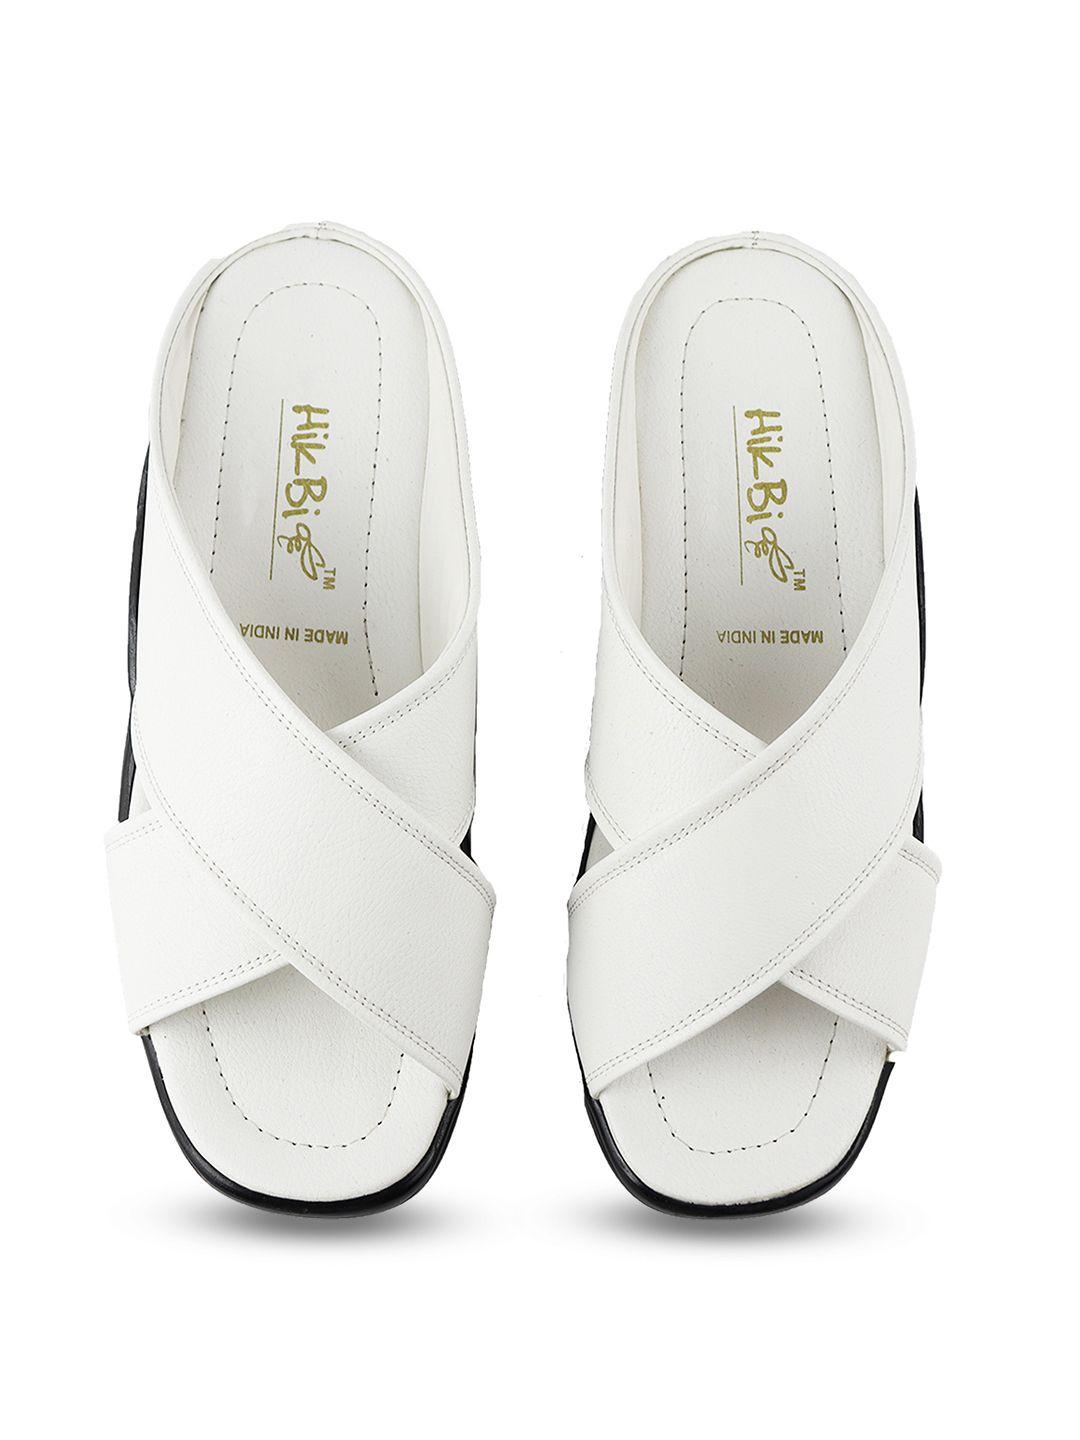 hikbi men open toe lightweight leather comfort sandals